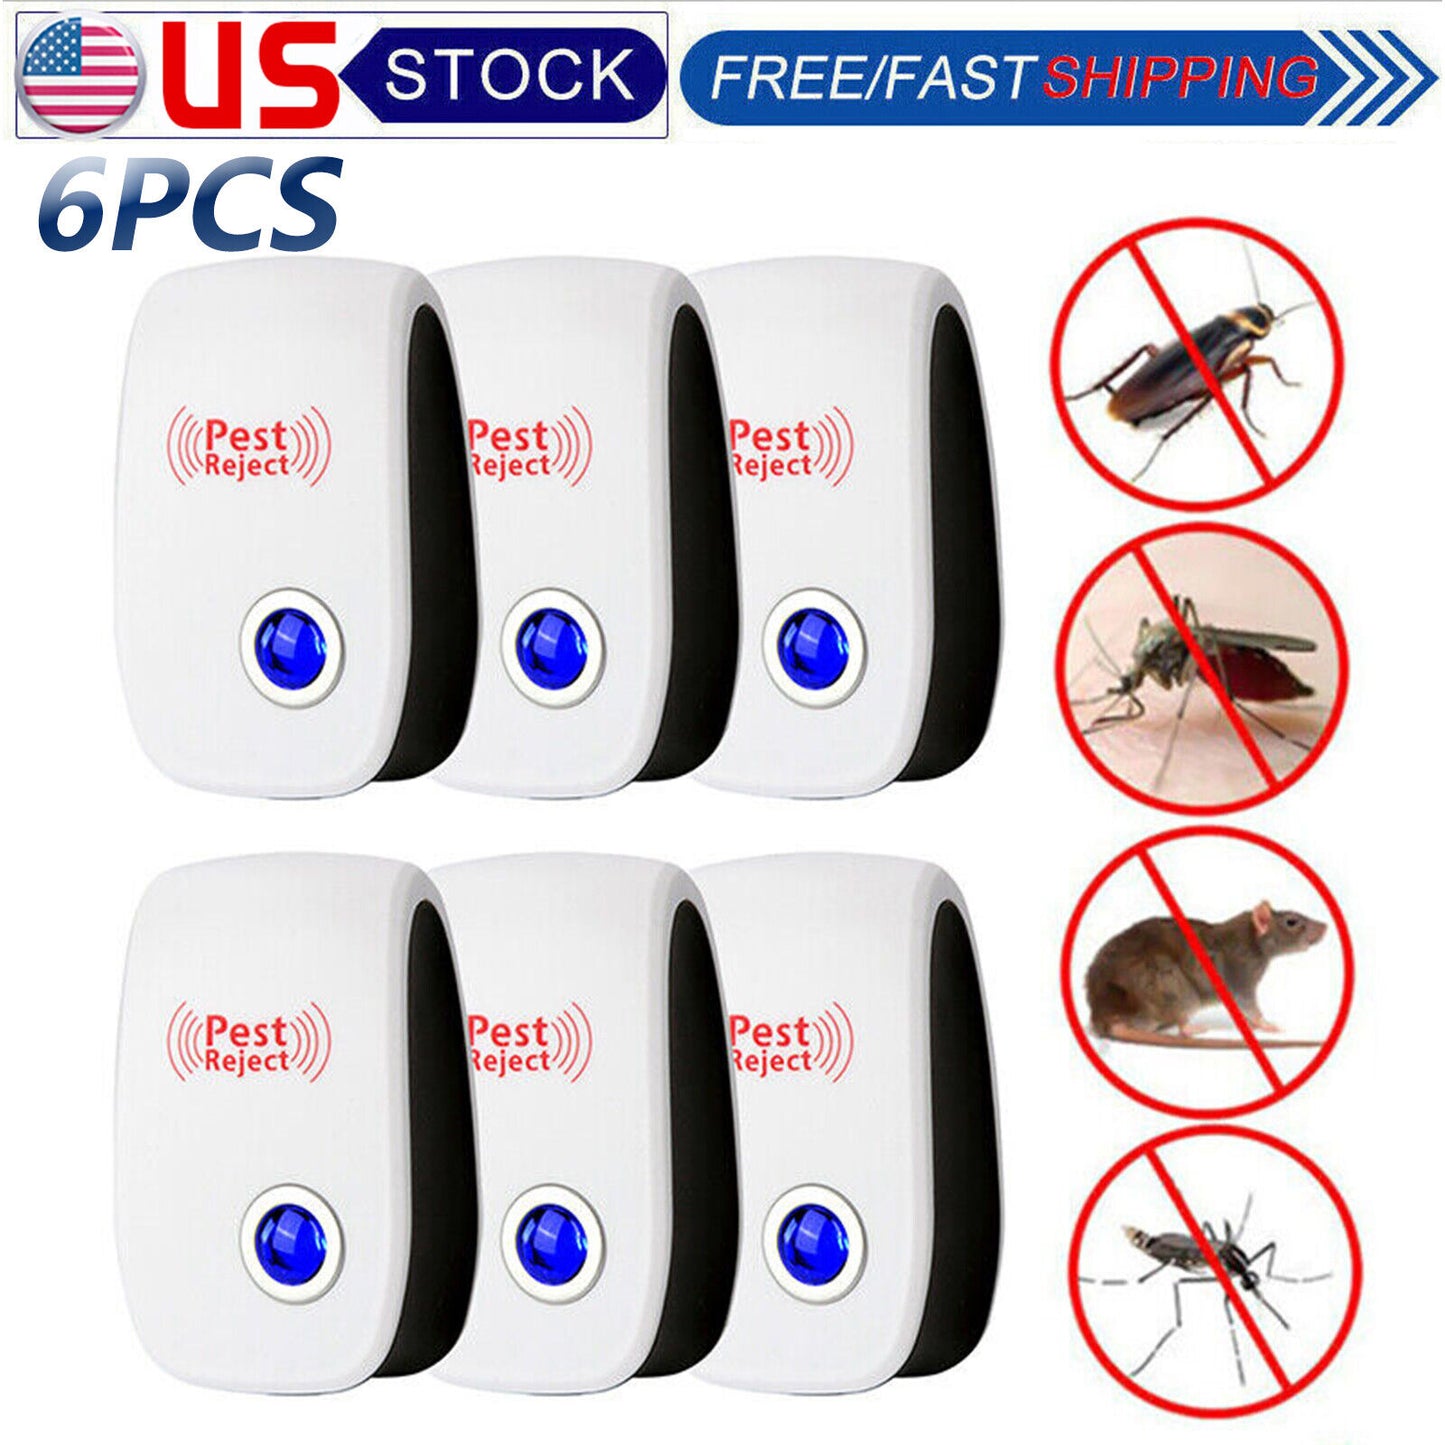 6Pcs Ultrasonic Pest Reject Home Control Electronic Repellent Rat Mice Repeller